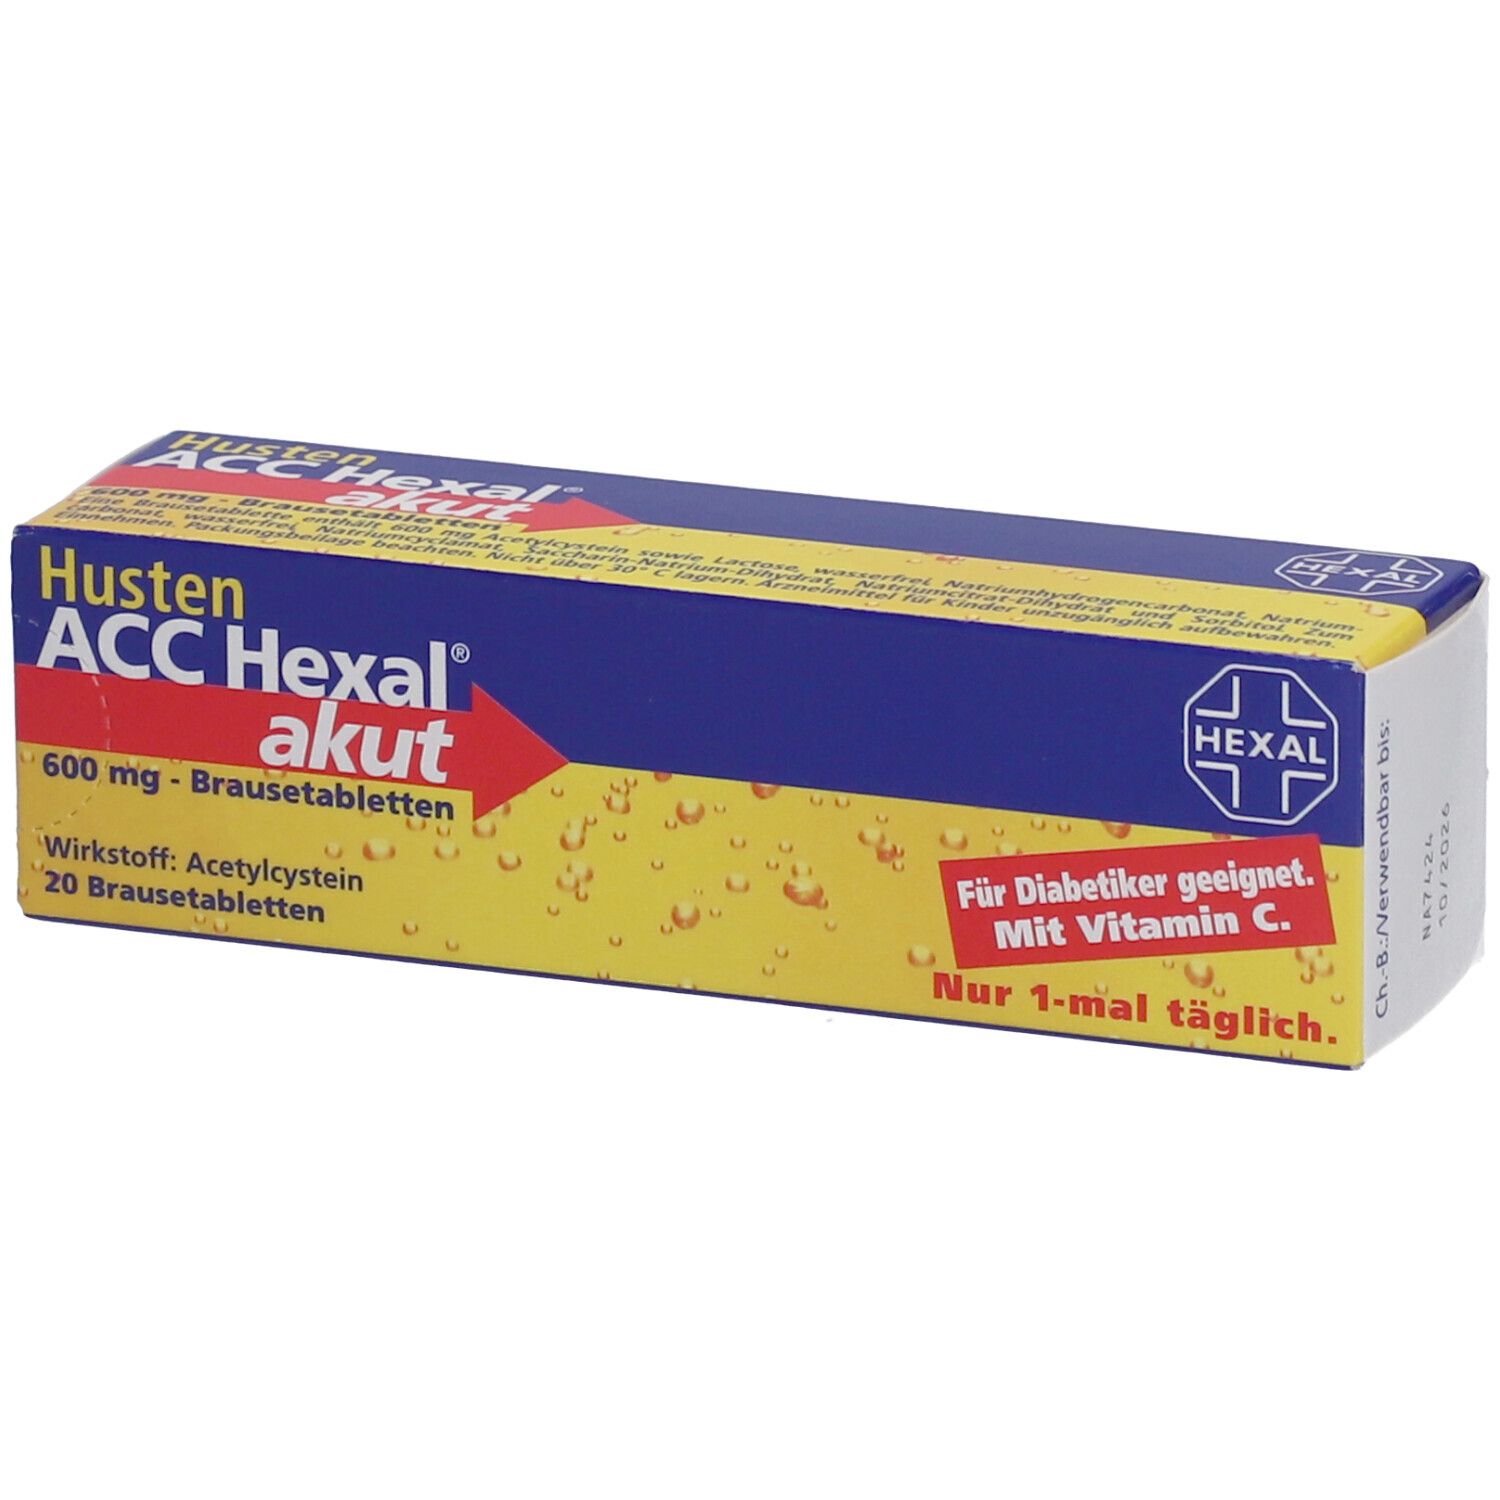 Husten ACC Hexal® akut 600 mg